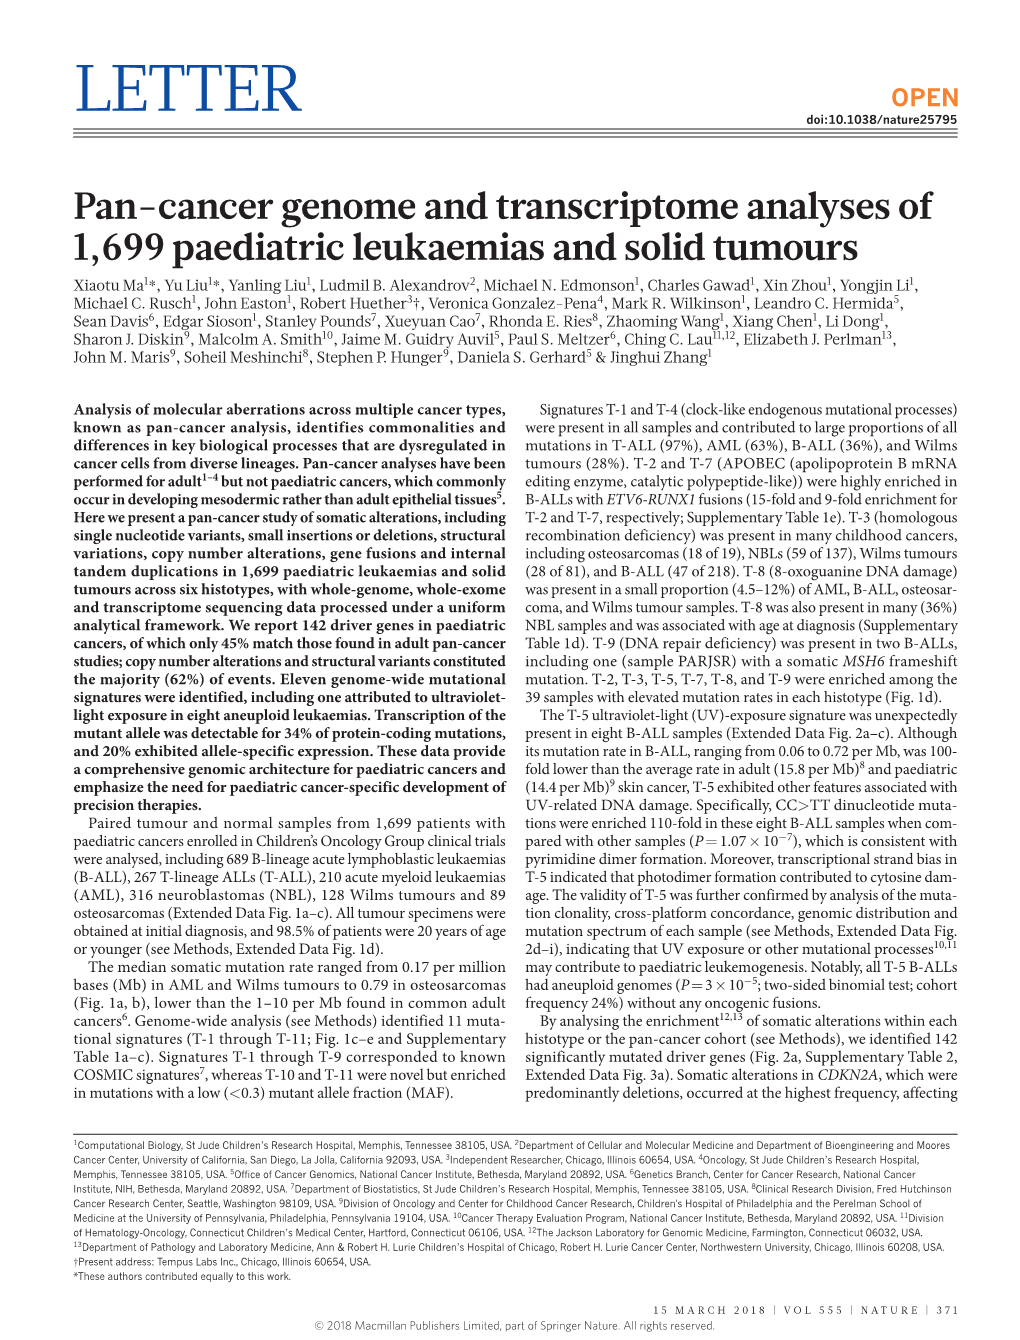 Pan-Cancer Genome and Transcriptome Analyses of 1,699 Paediatric Leukaemias and Solid Tumours Xiaotu Ma1*, Yu Liu1*, Yanling Liu1, Ludmil B